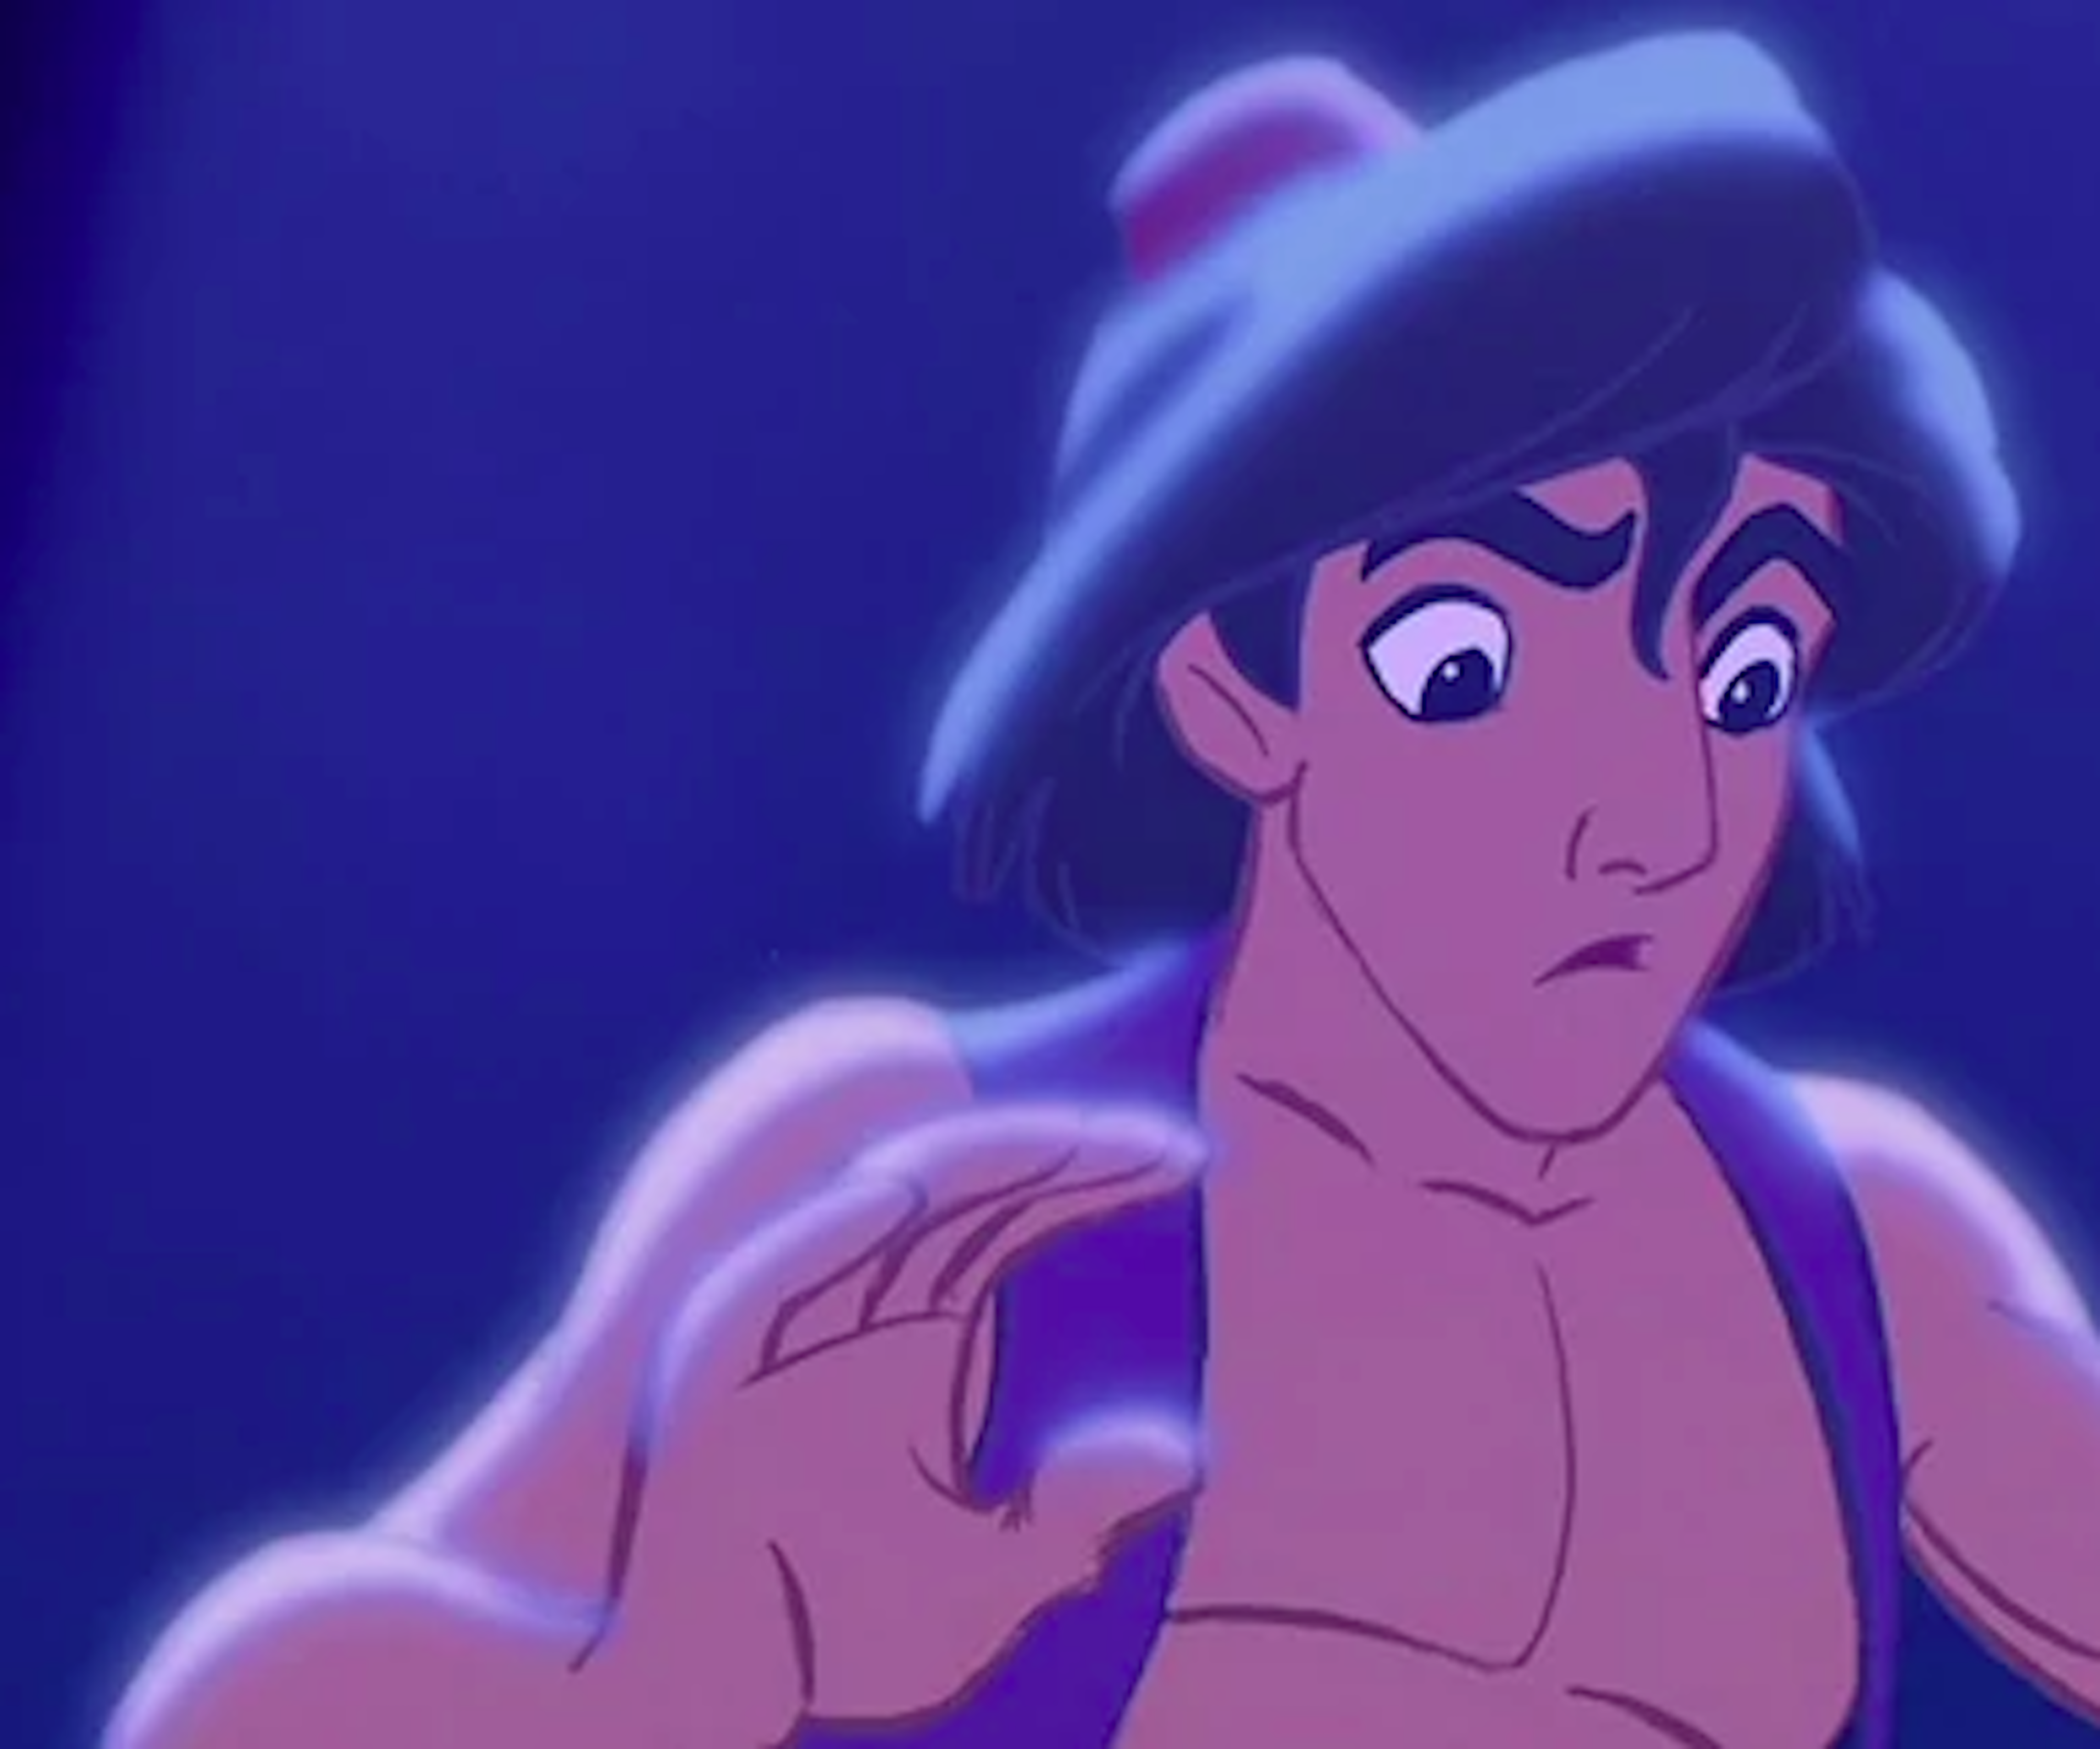 Disney Promises New Aladdin Won't Star a White Guy